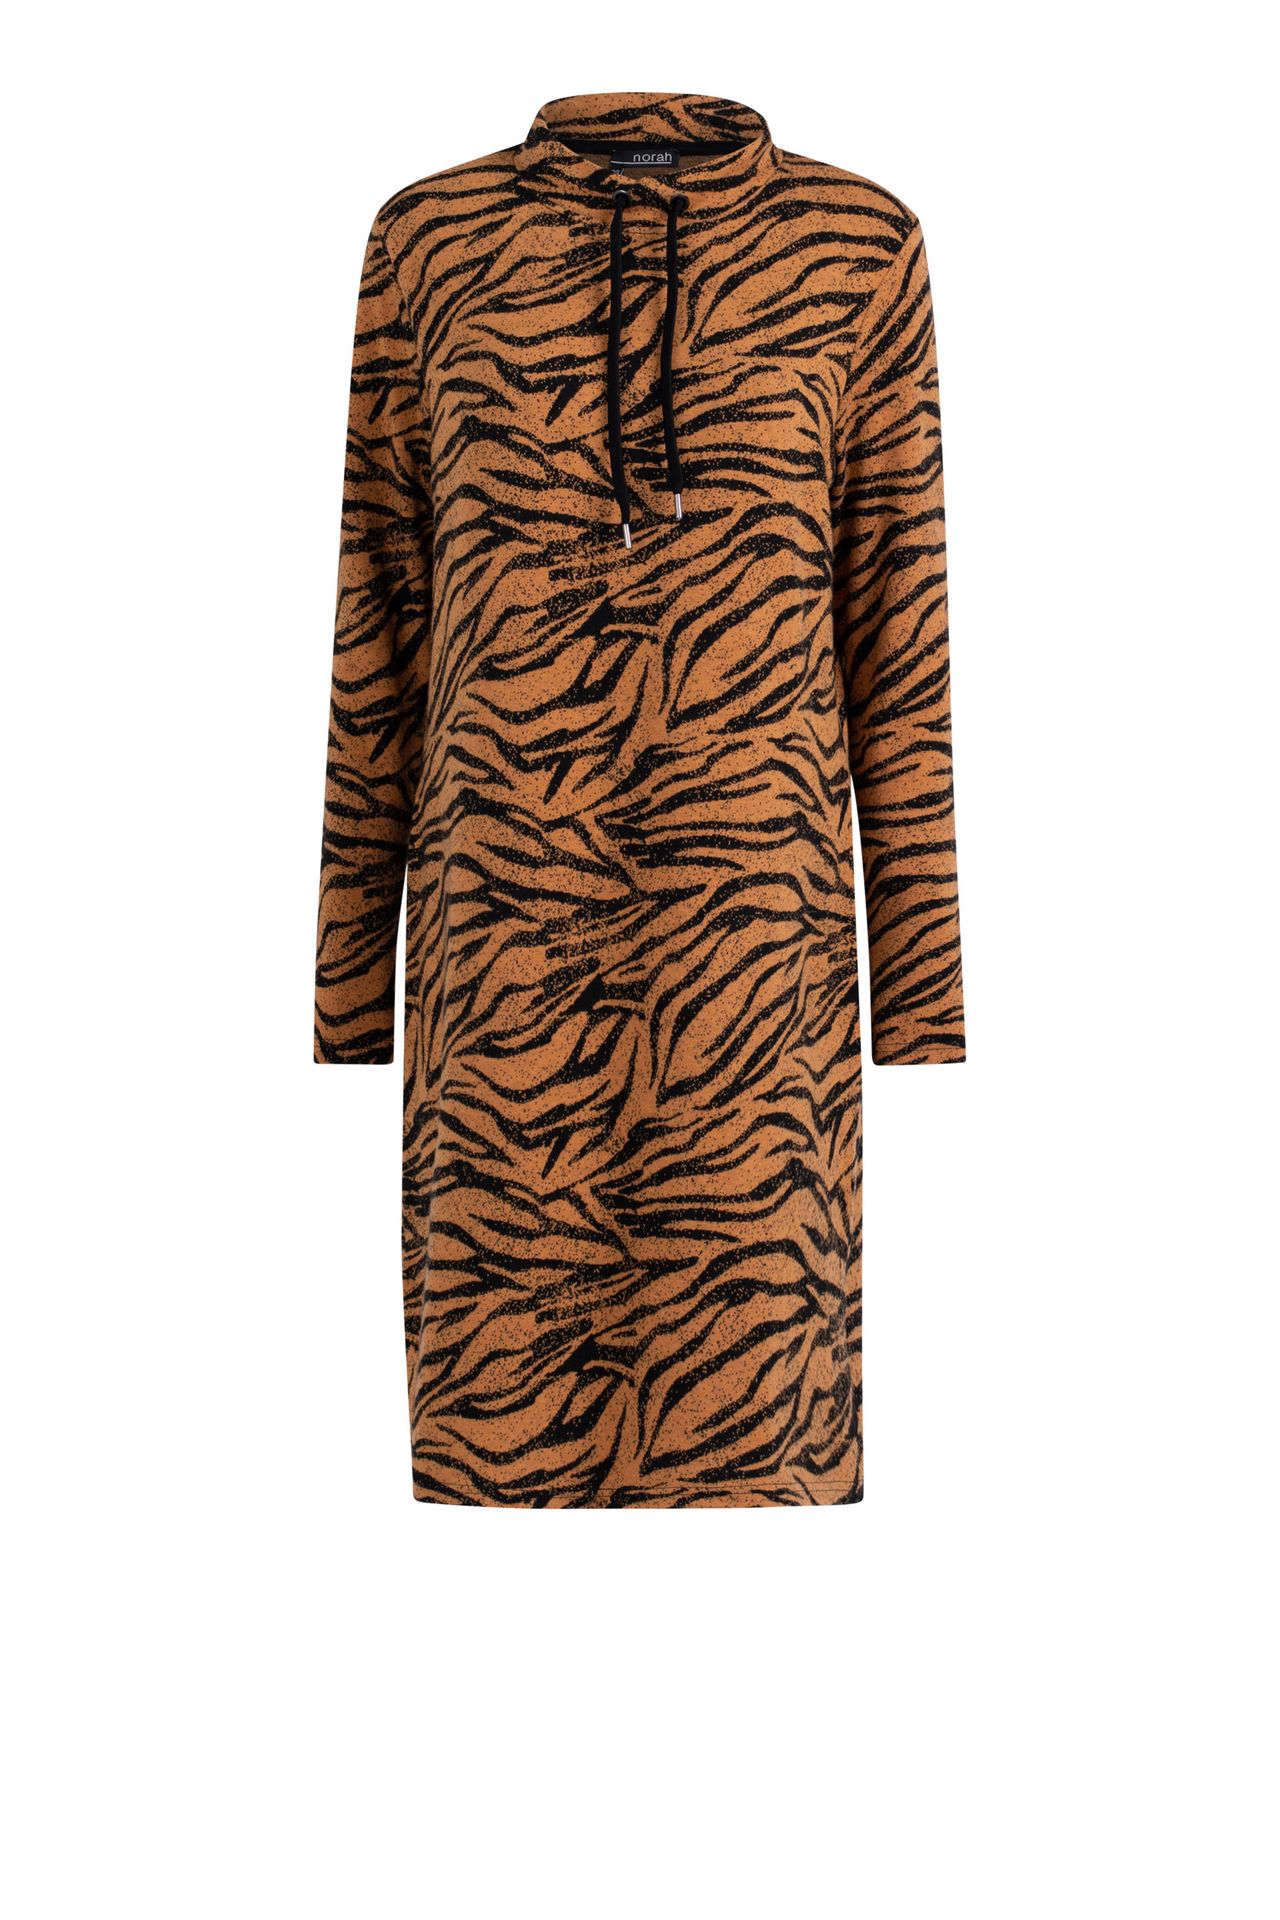 Norah Jurk bruin tijger cinnamon multicolor 211874-276